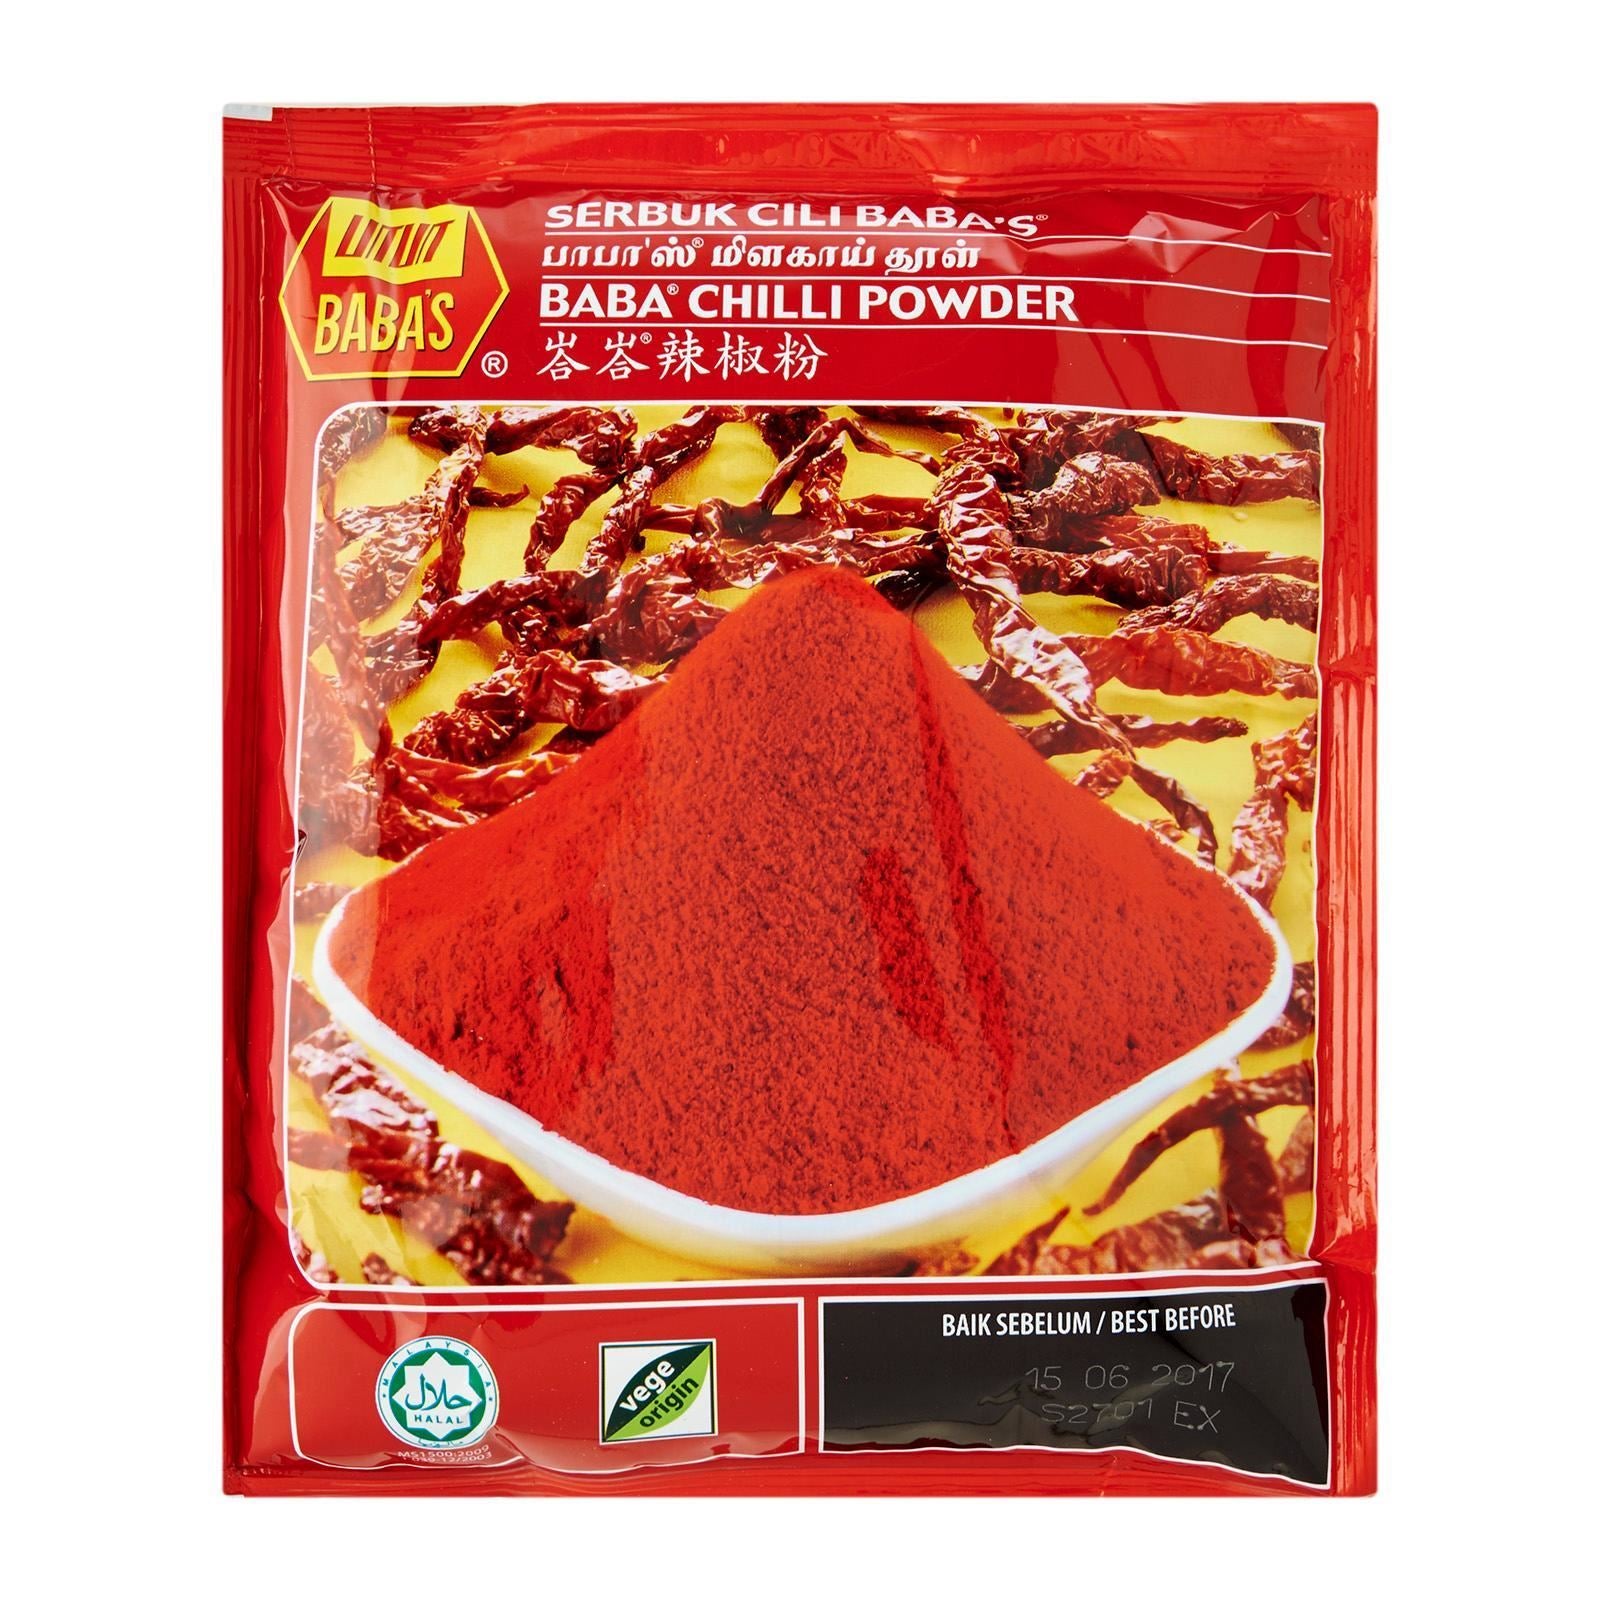 BABA'S Chilli Powder